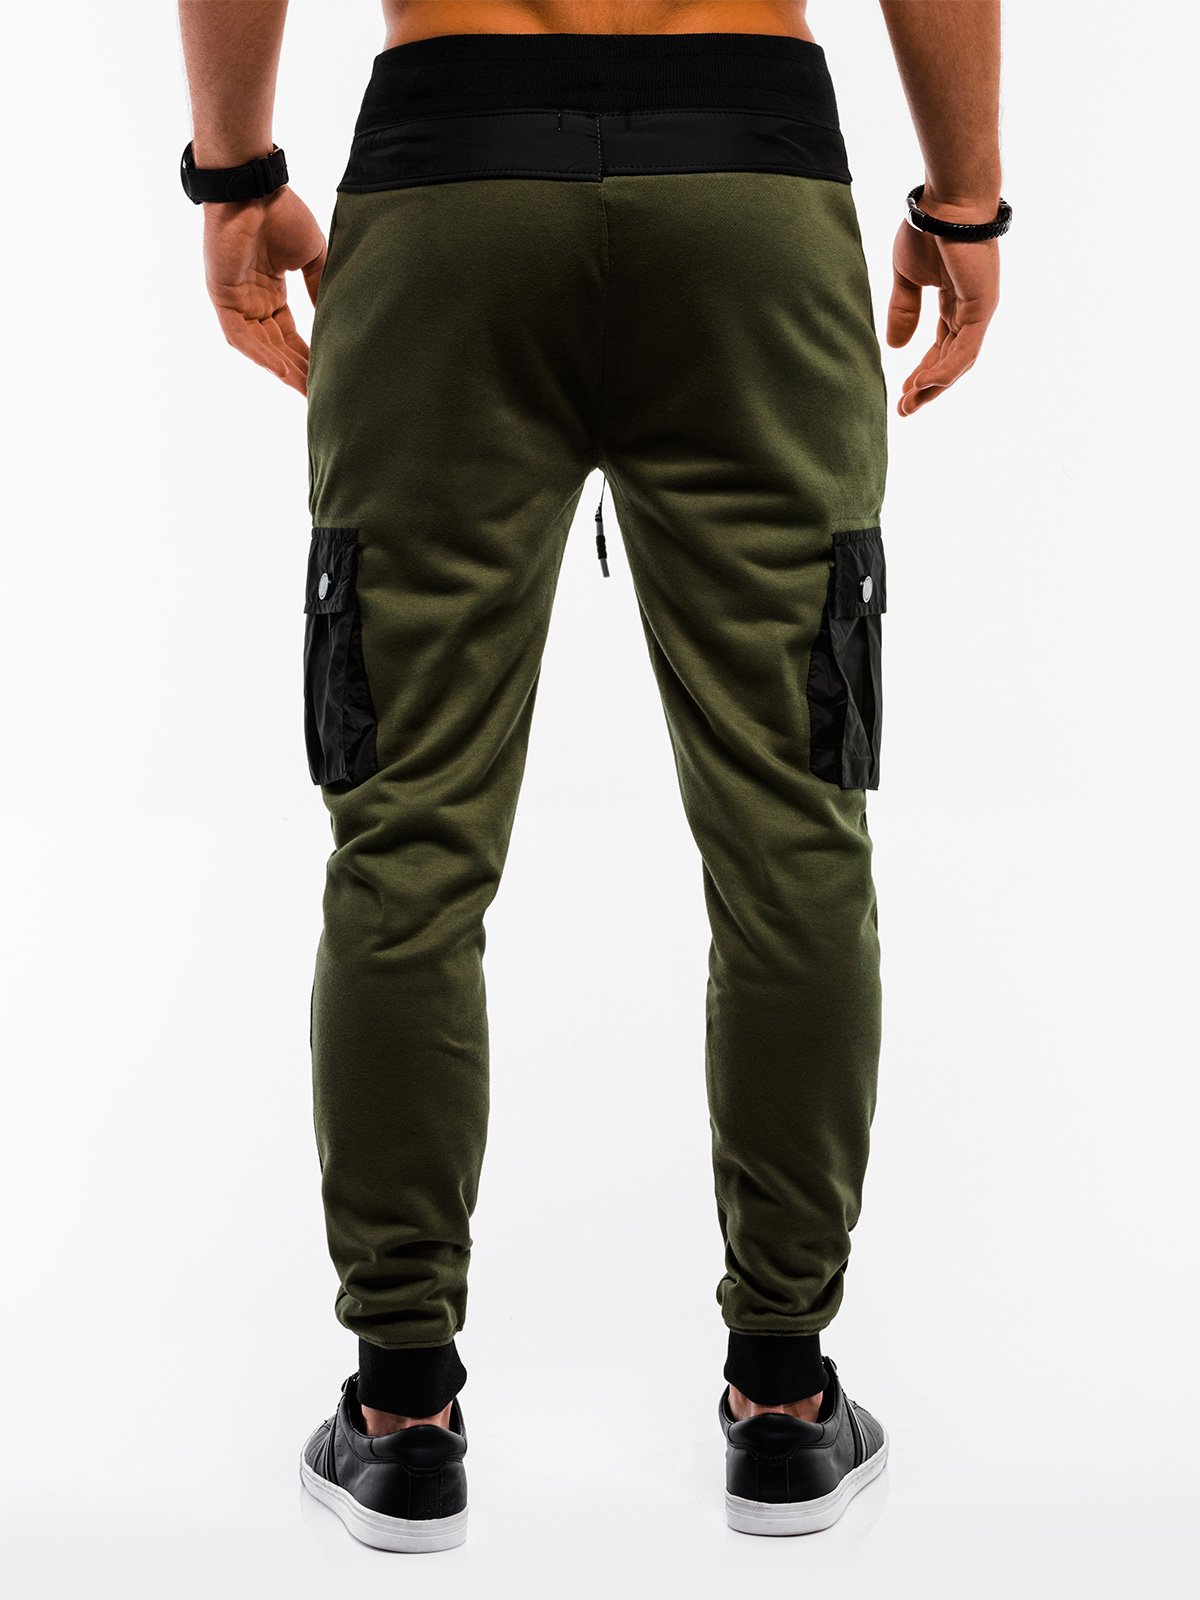 Men's sweatpants P645 - khaki | MODONE wholesale - Clothing For Men